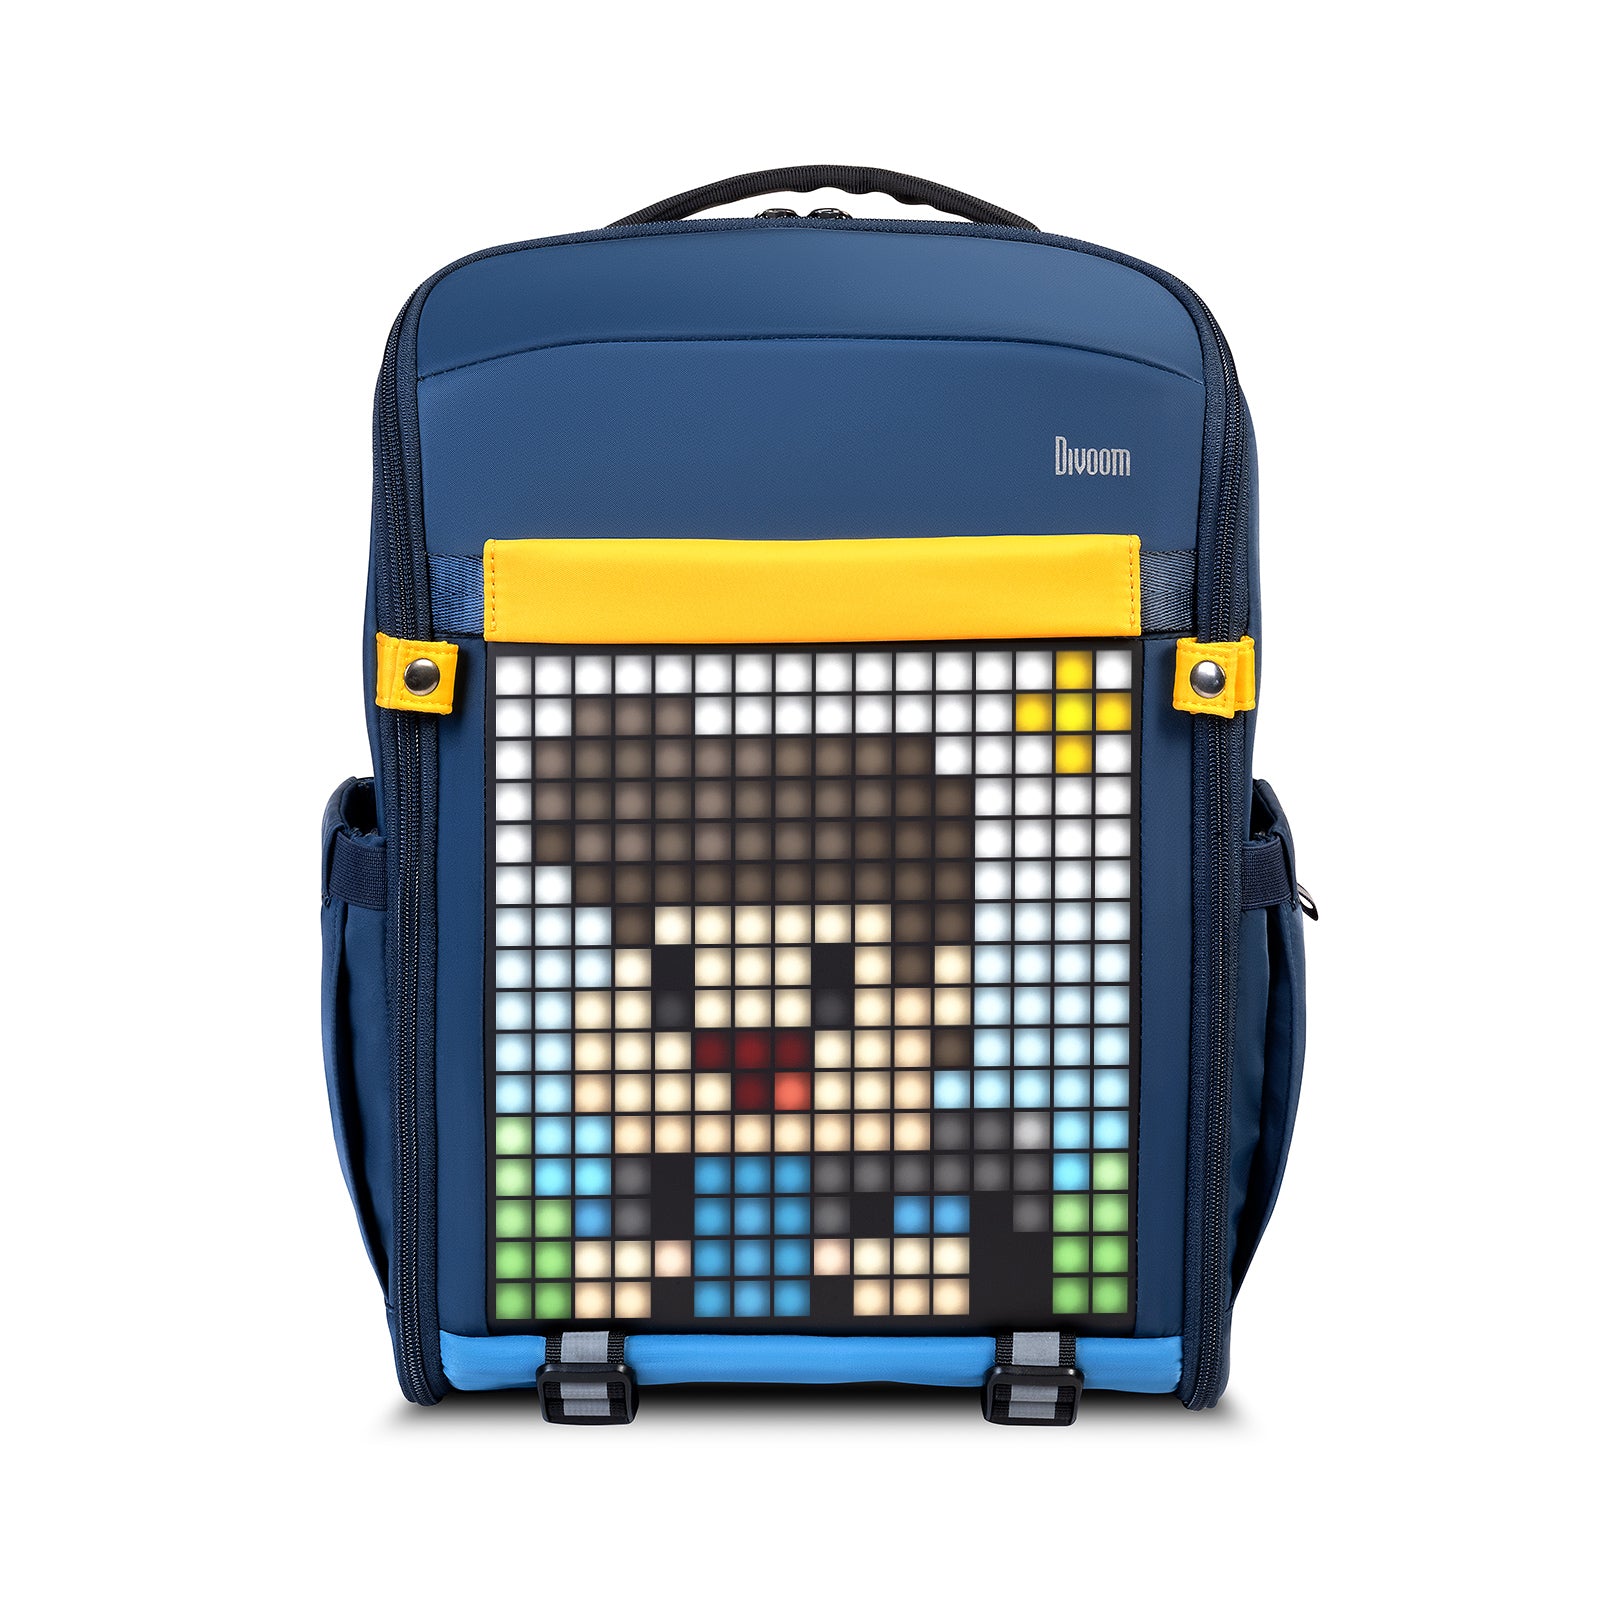 Divoom Pixel Art backpack for children